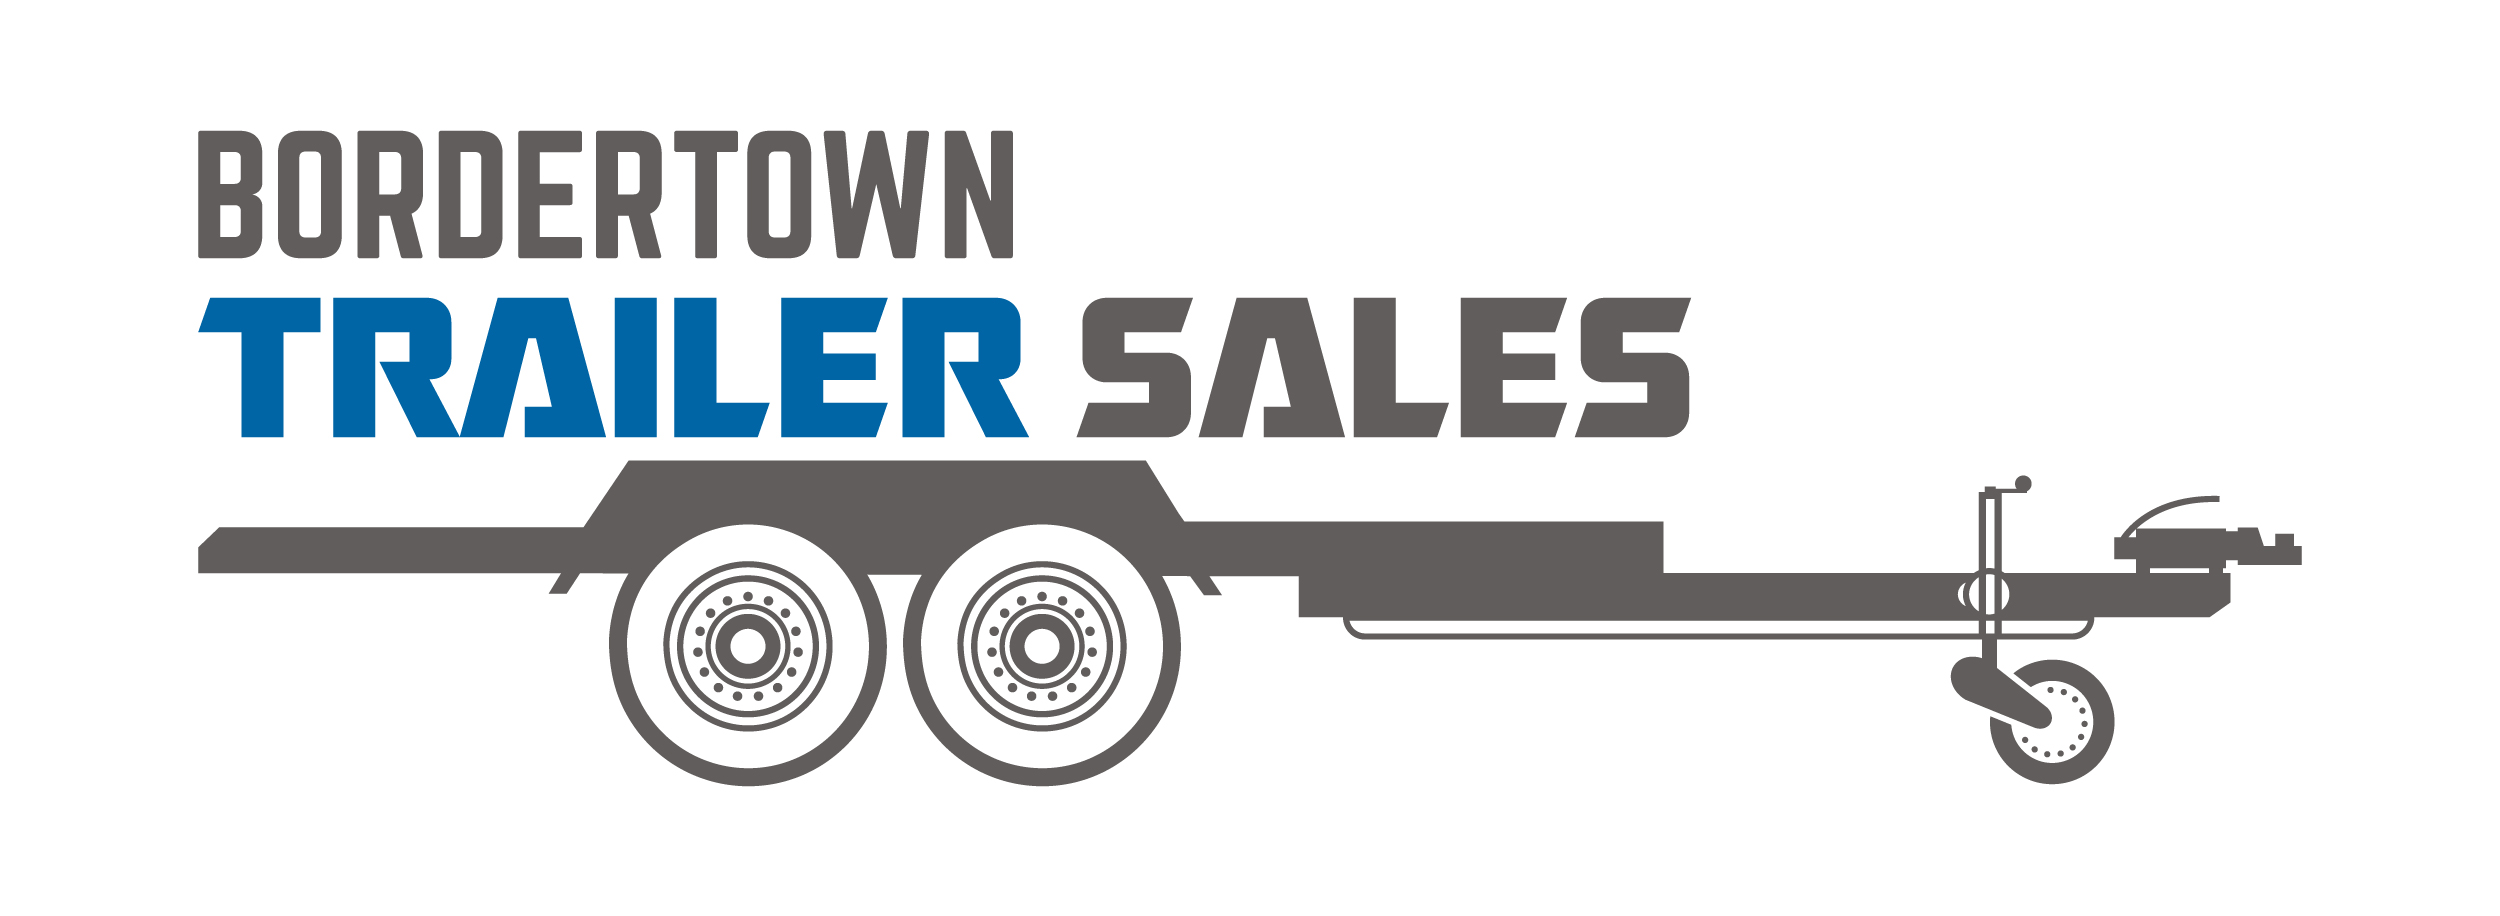 bordertown trailer sales - custom quality trailers